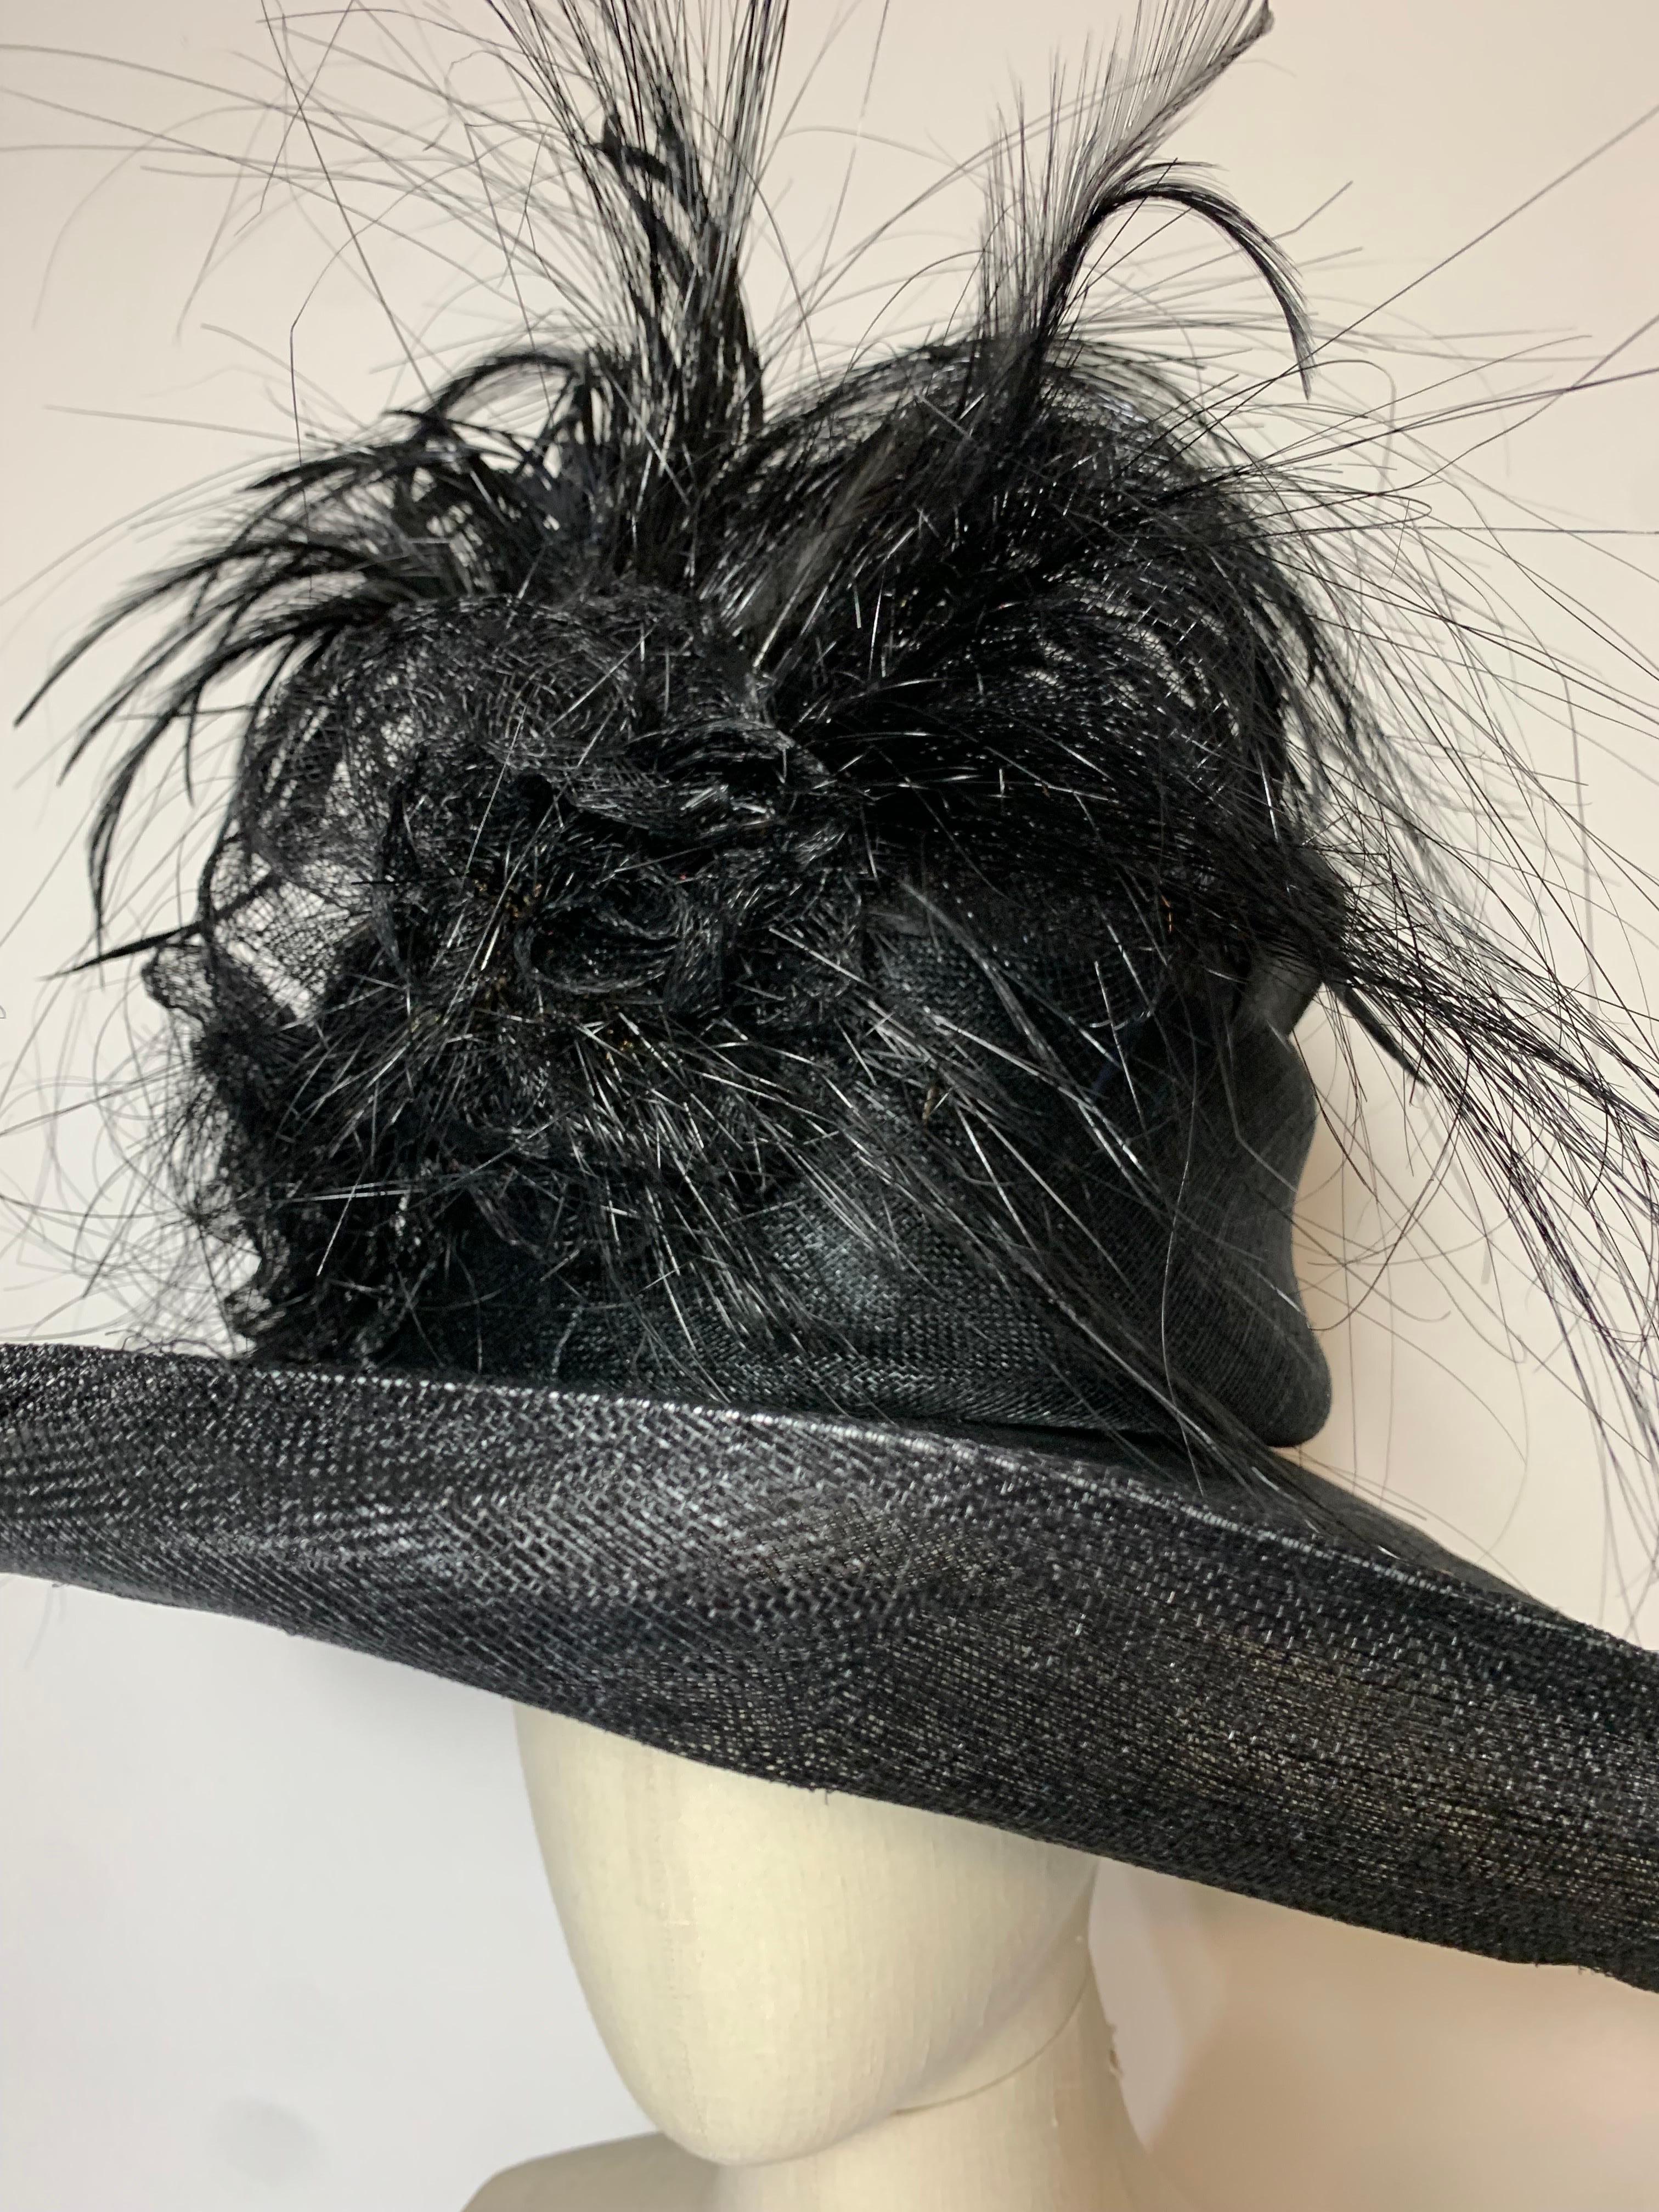 Maison Michel Spring/Summer Custom Made Black Straw Wide Brim Hat w Huge Feather For Sale 9